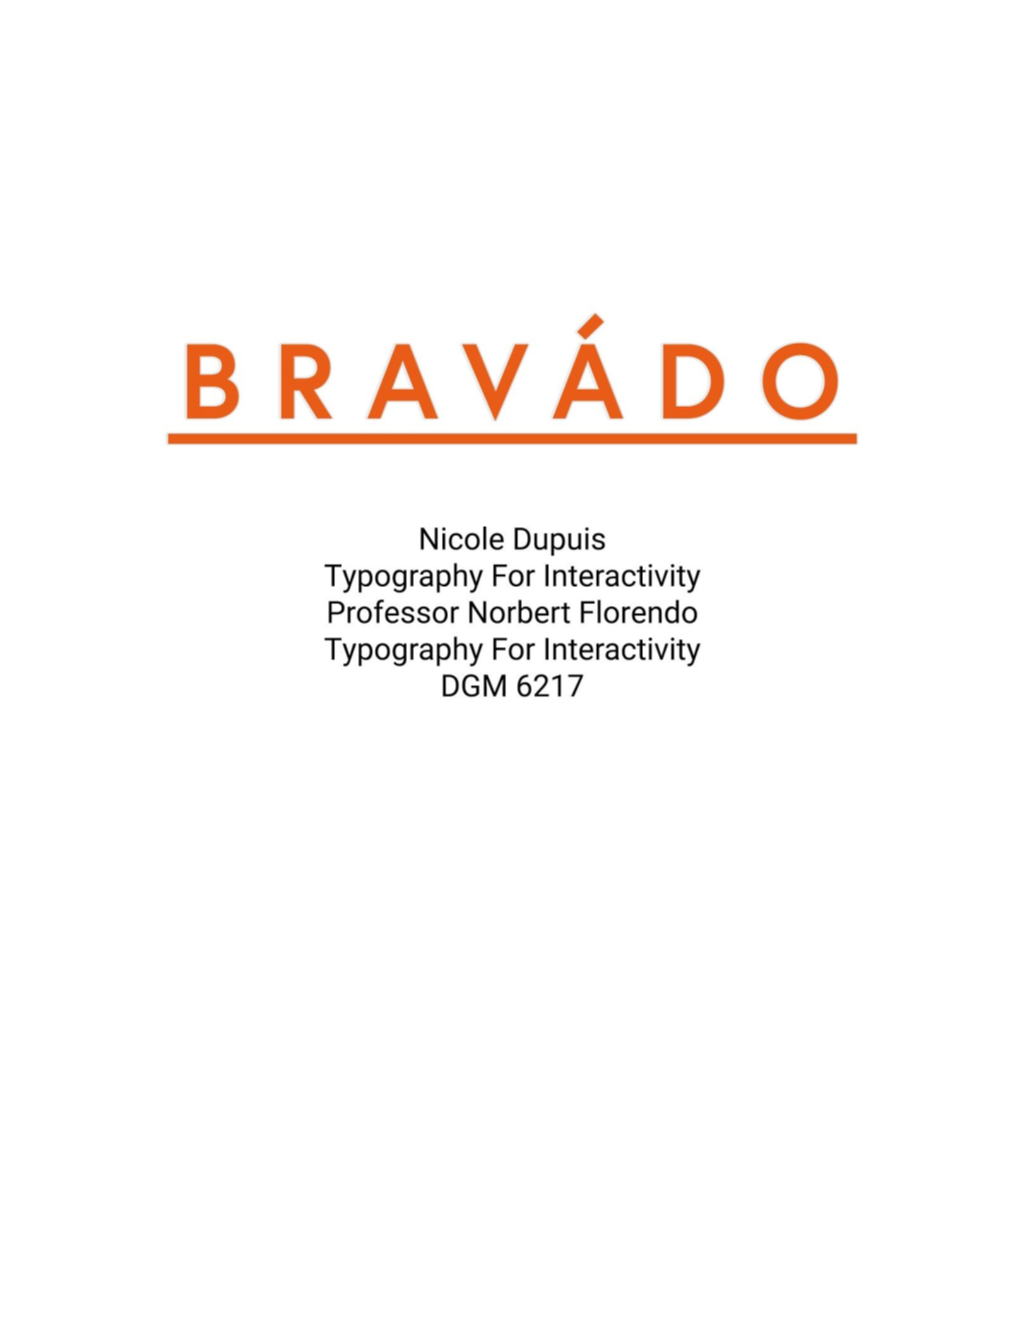 Bravado-Concept-And-Research.Pdf